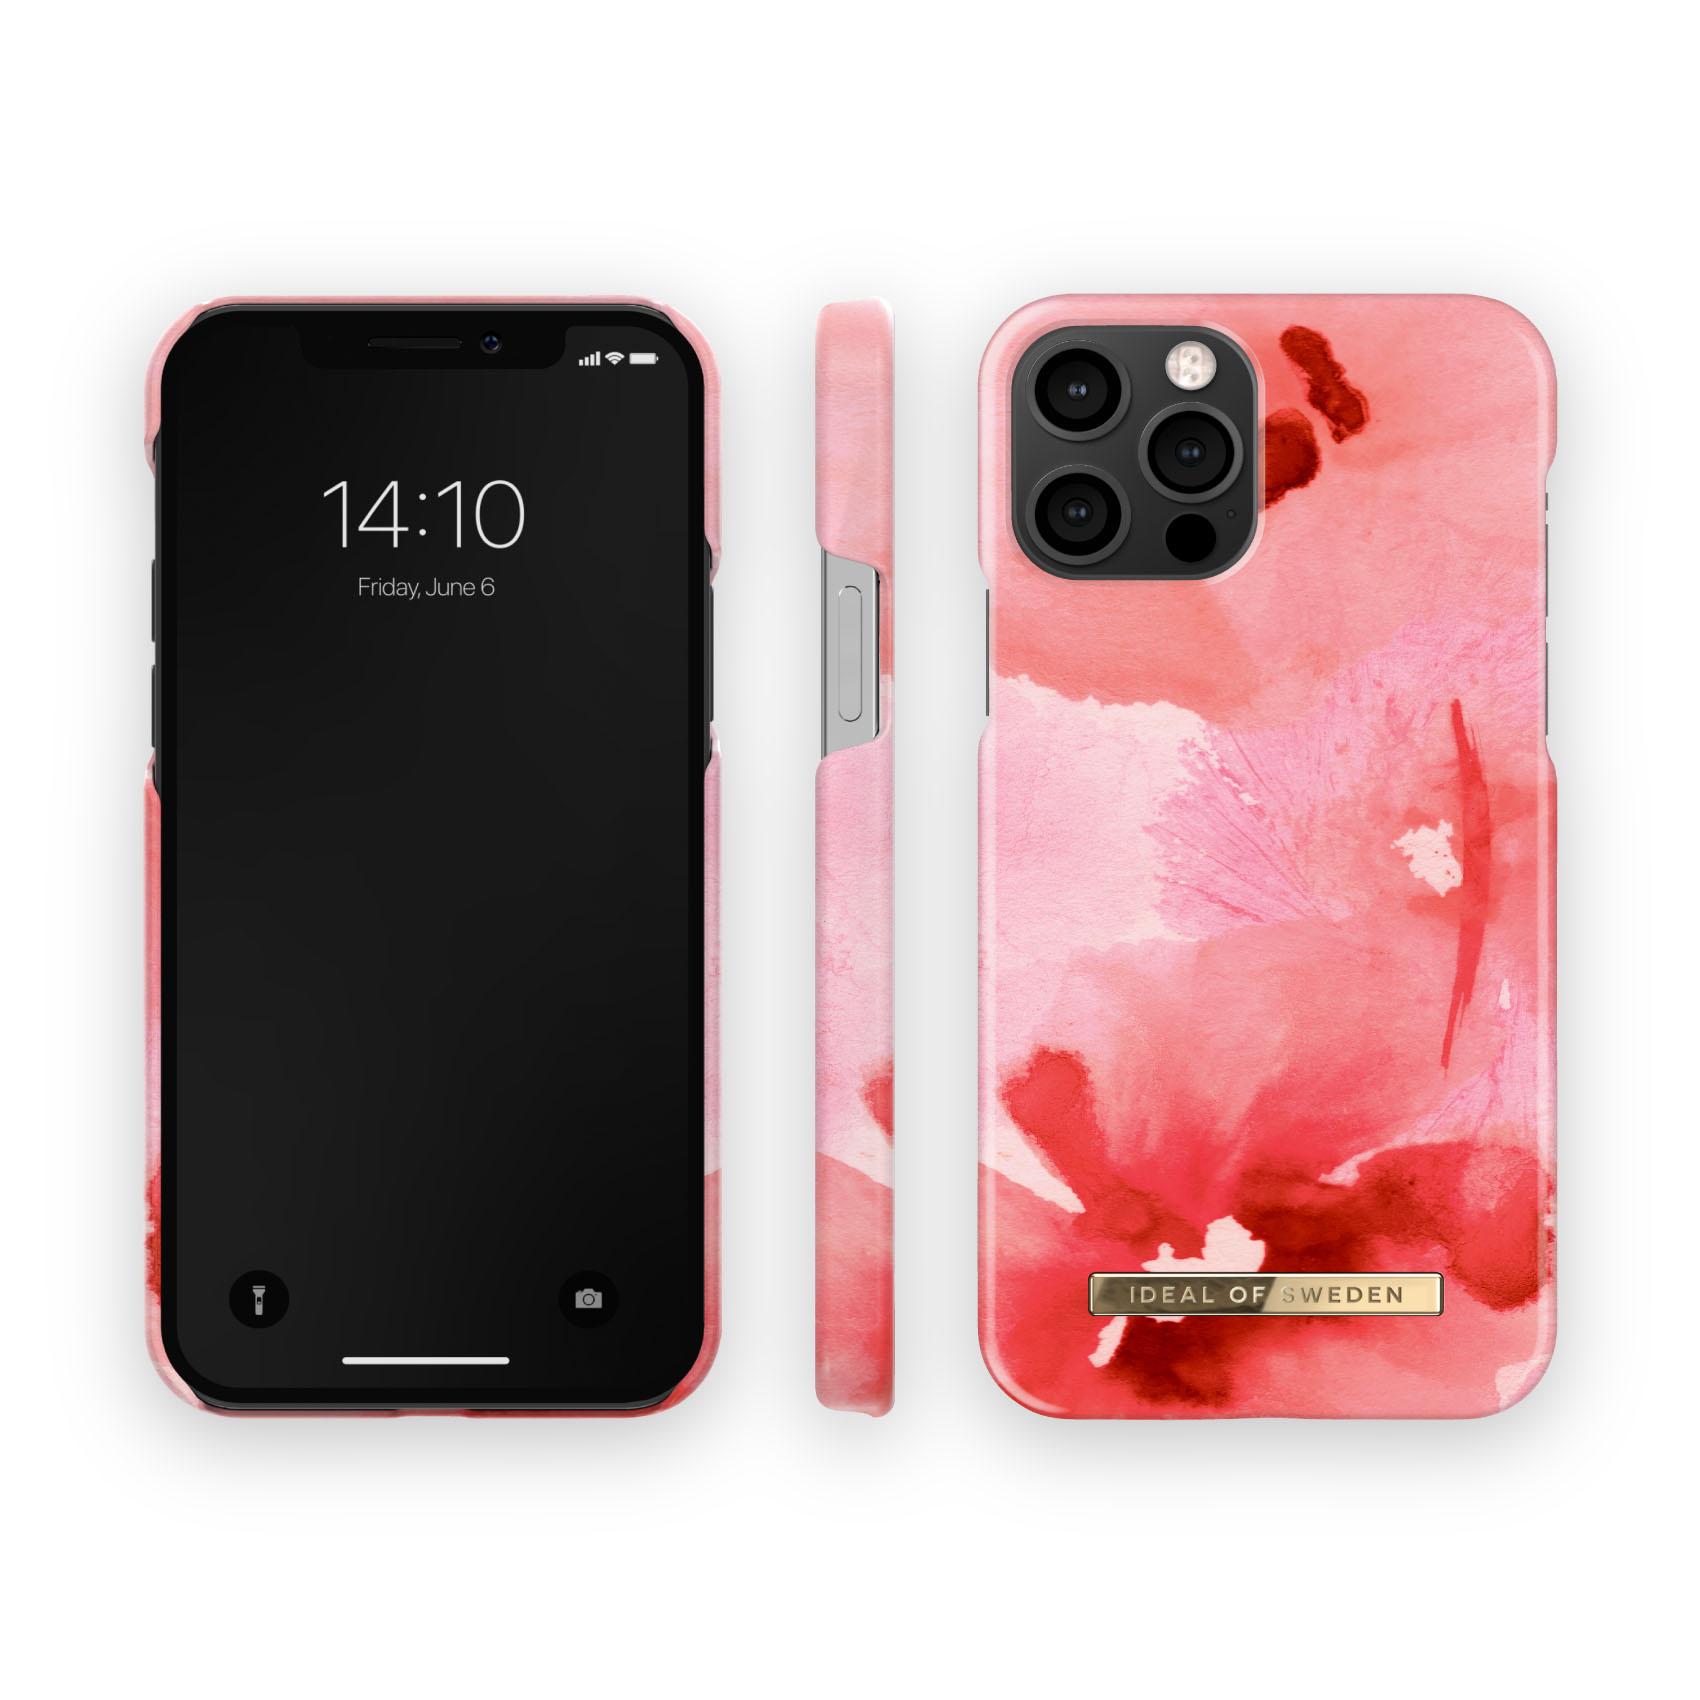 Fashion Case iPhone 12/12 Pro Coral Blush Floral